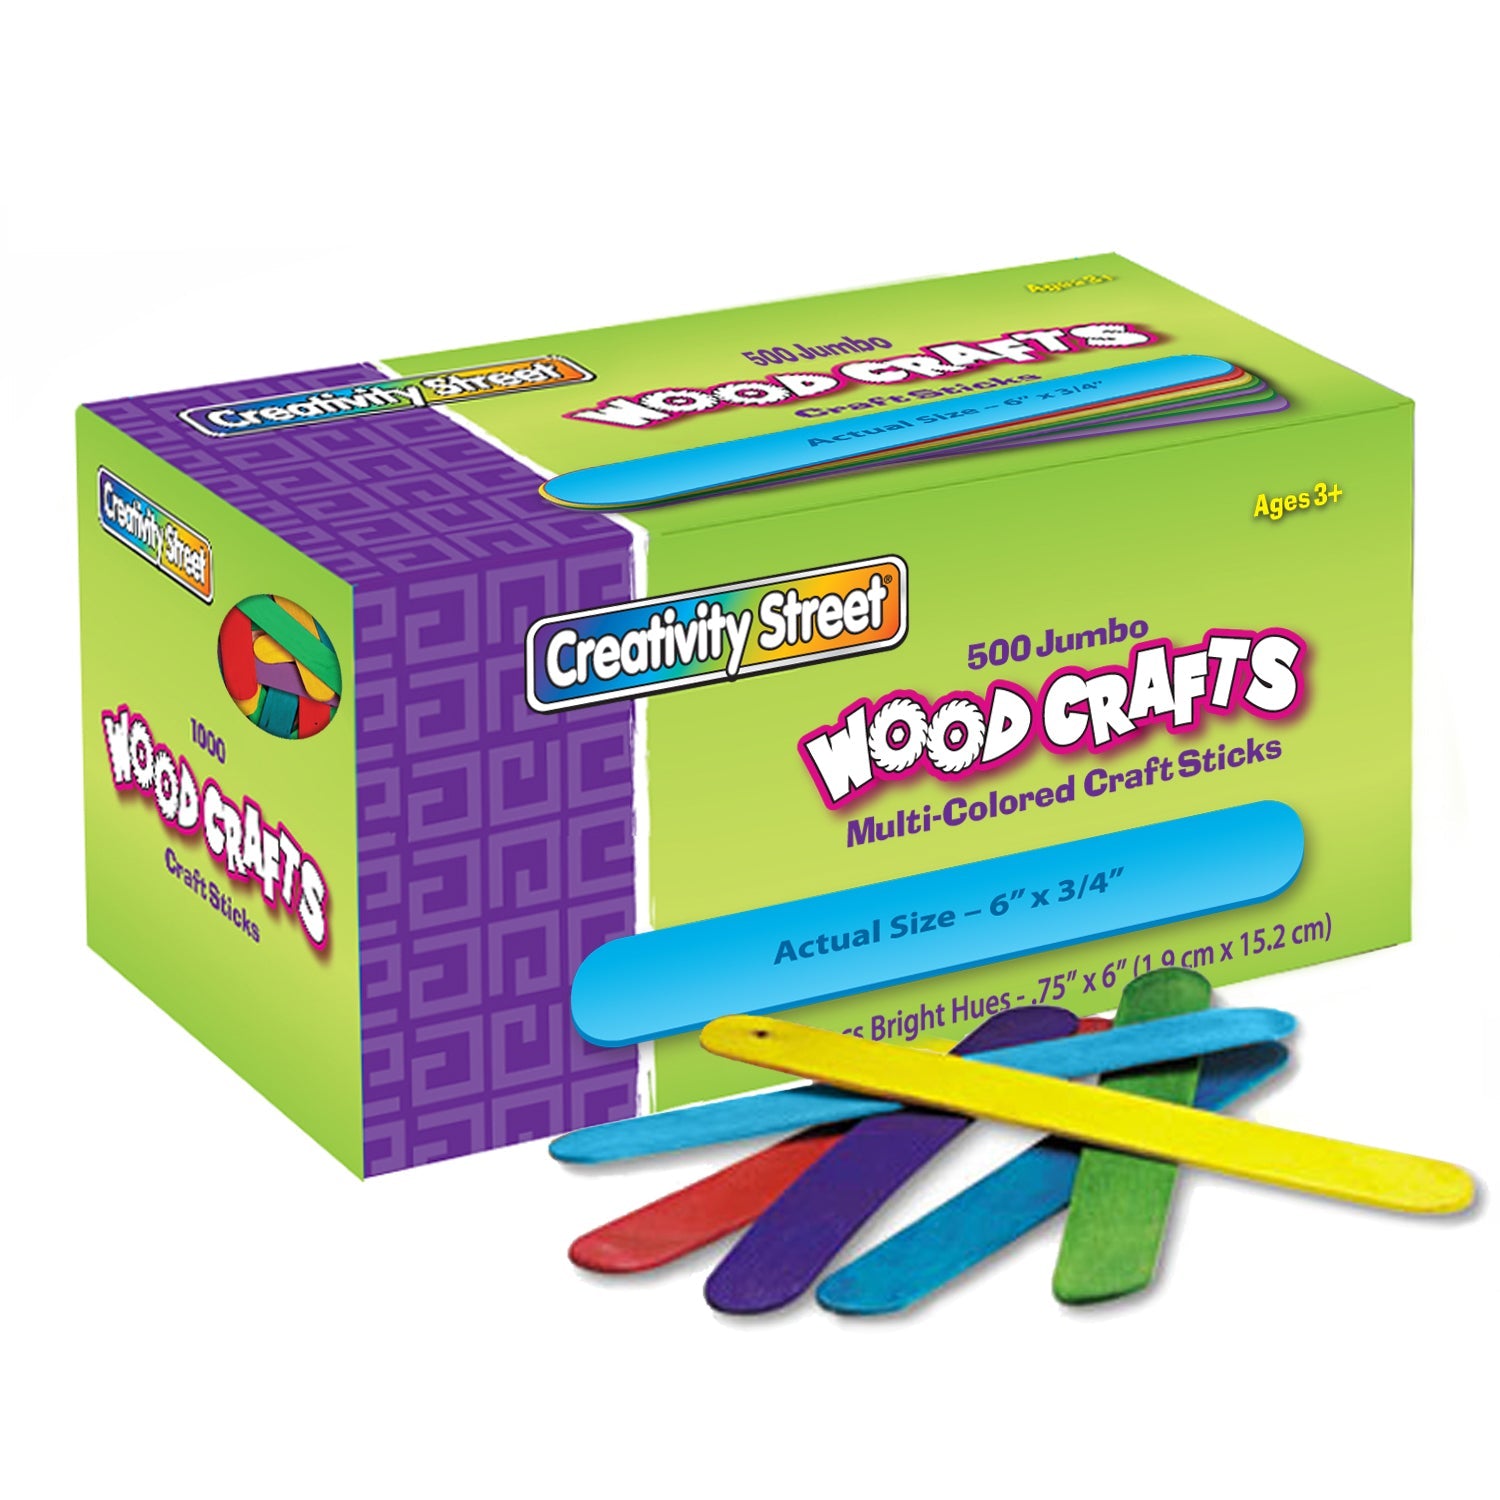 Colored Jumbo Wood Craft Sticks